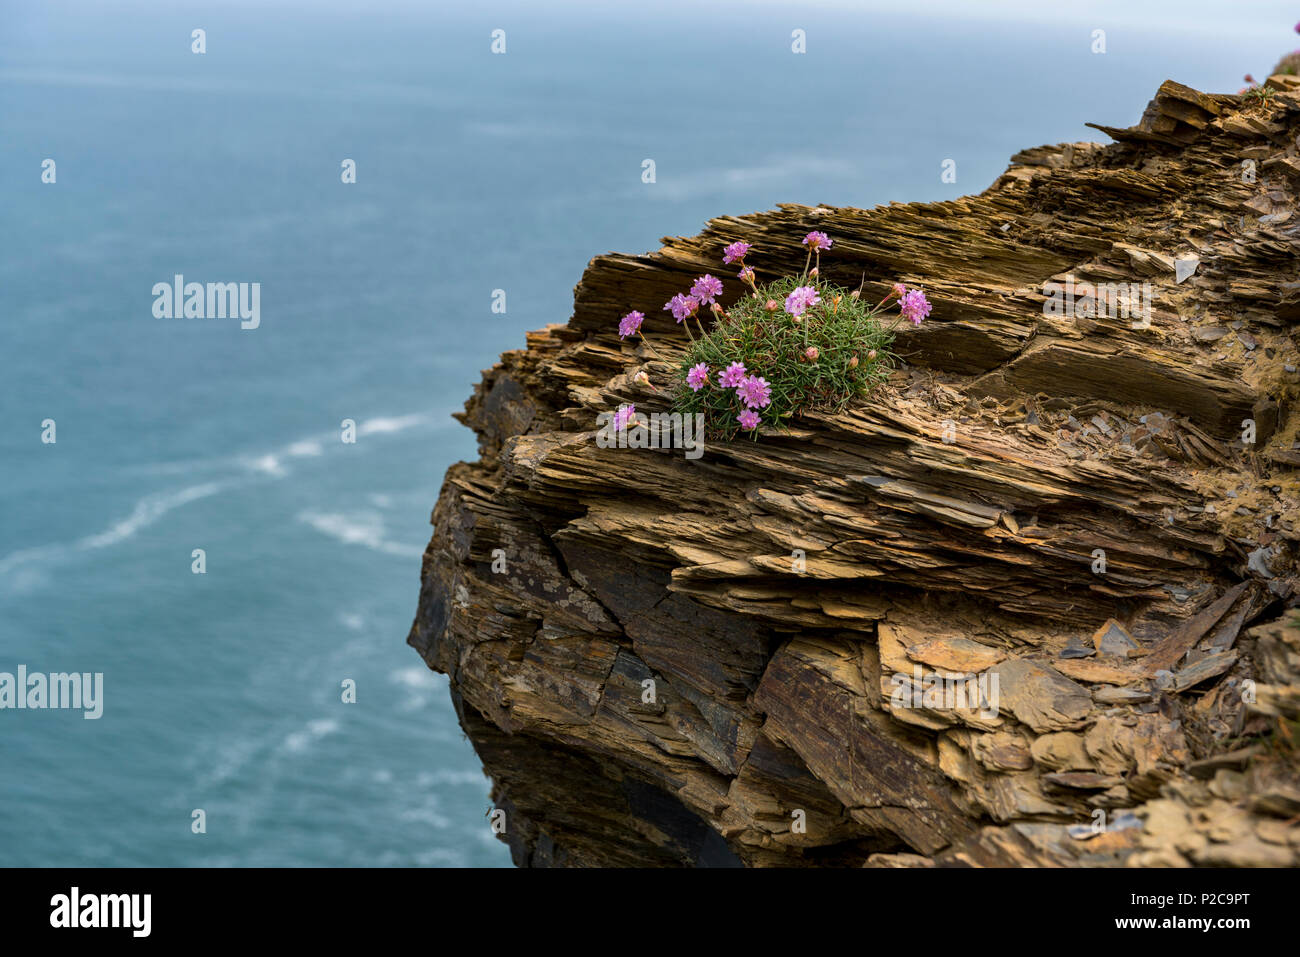 Armeria maritima, thrift along a rocky Cornish coastline. Stock Photo